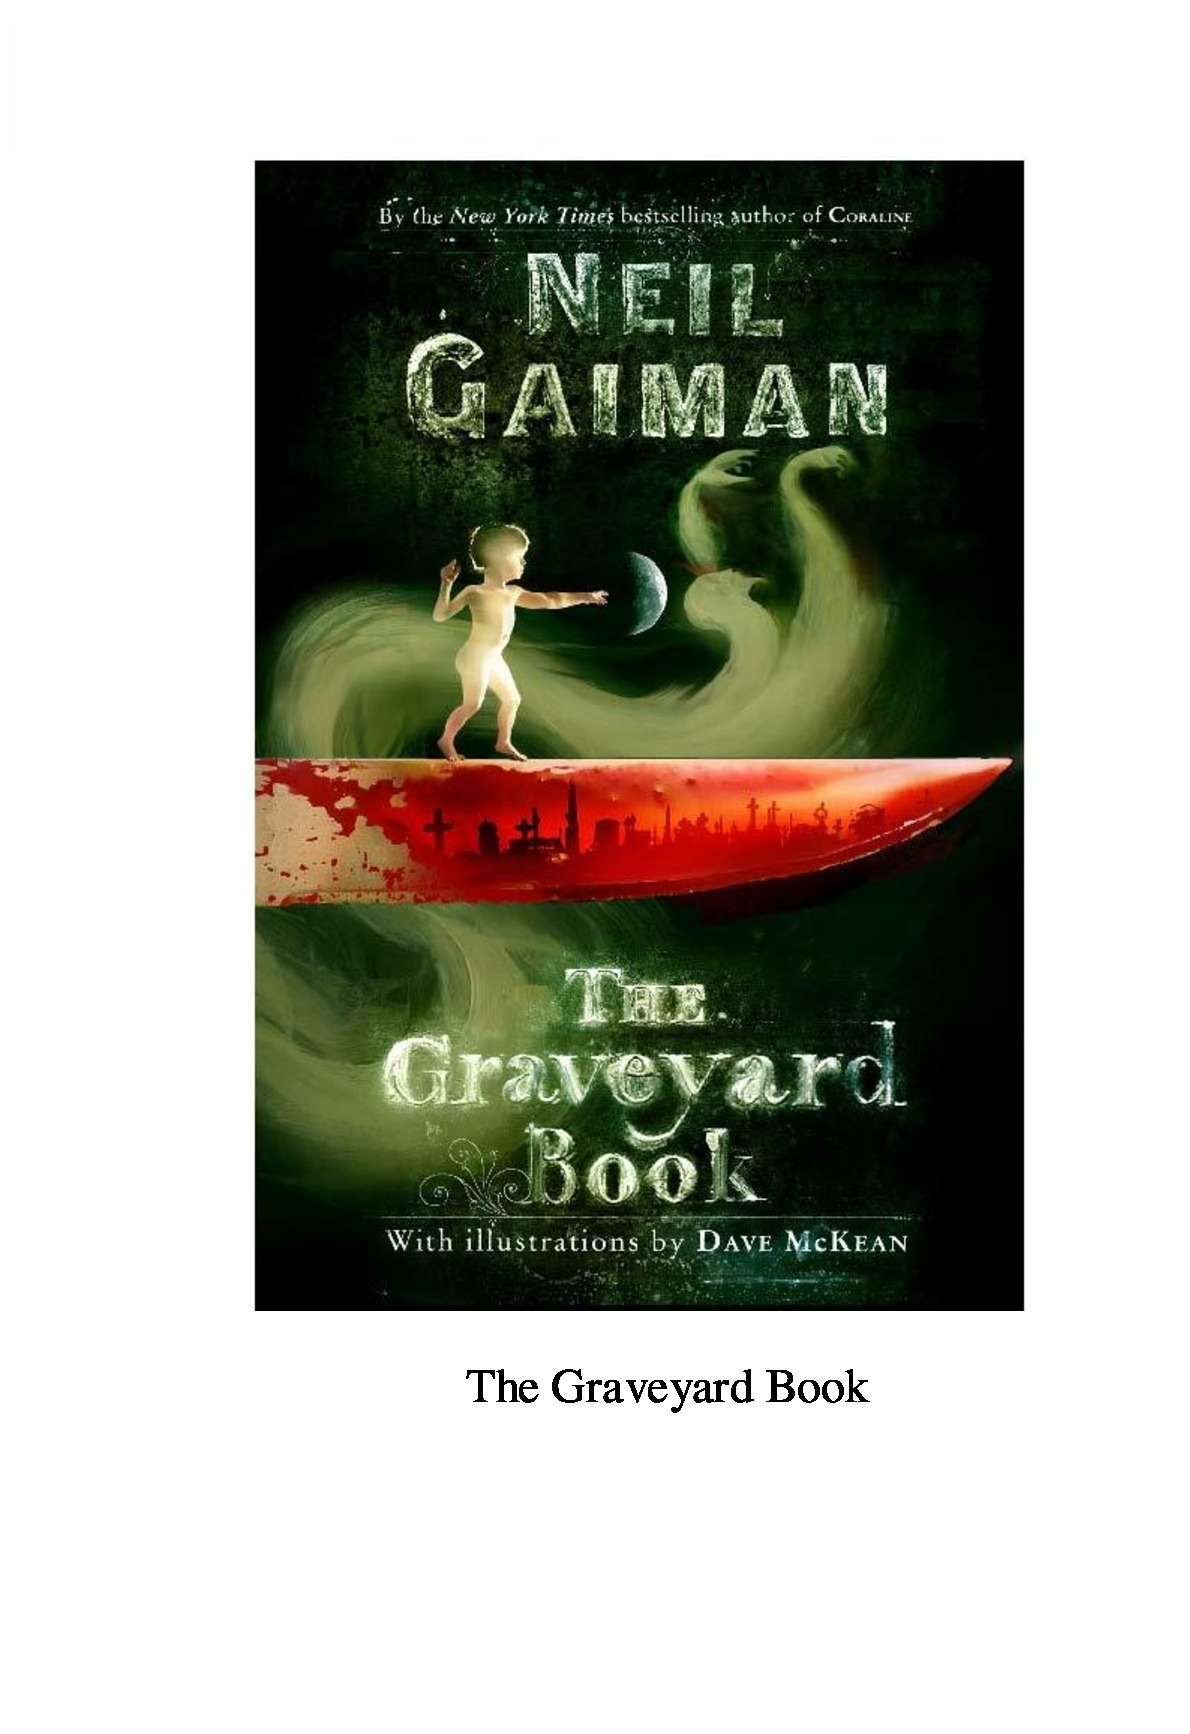 The Graveyard Book 【坟场之书】